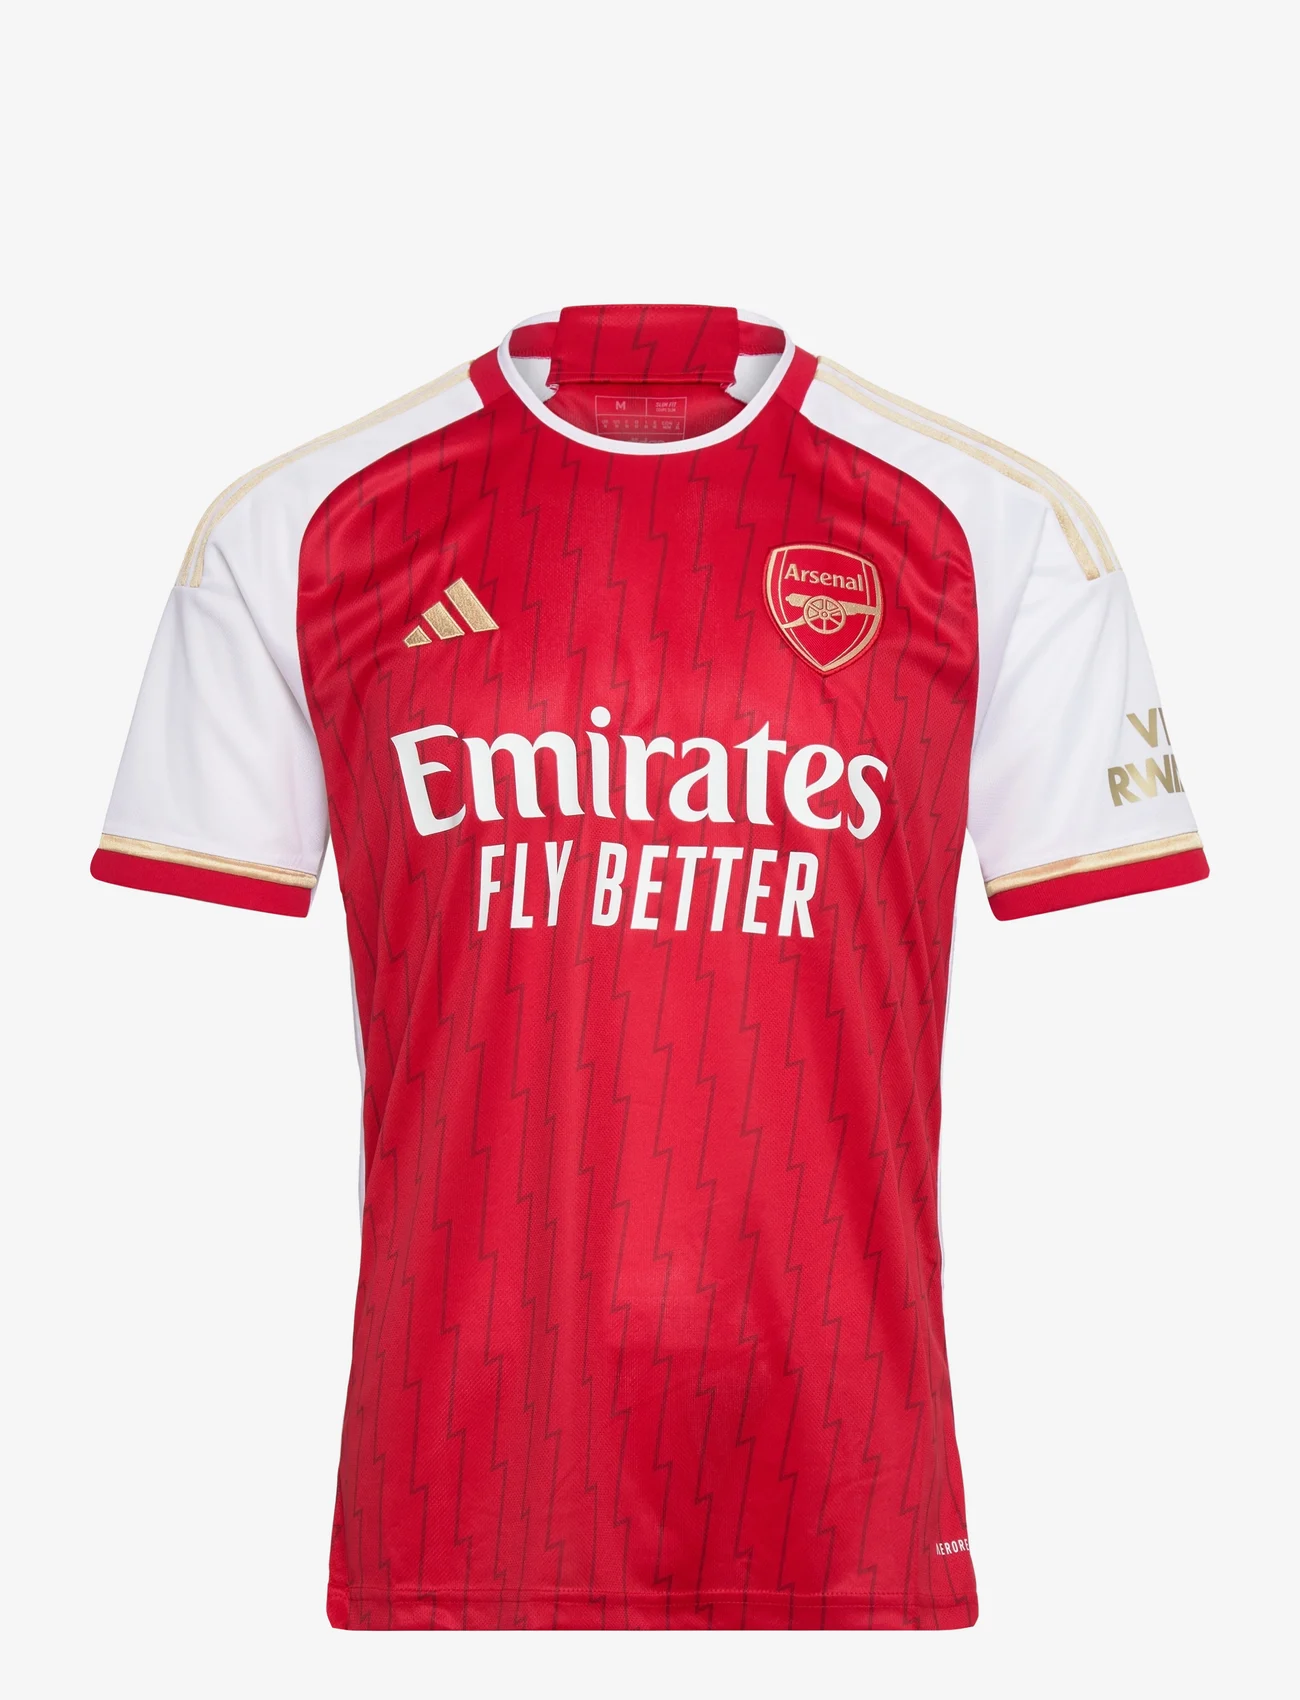 adidas Performance - Arsenal 23/24 Home Jersey - fodboldtrøjer - betsca/white - 0